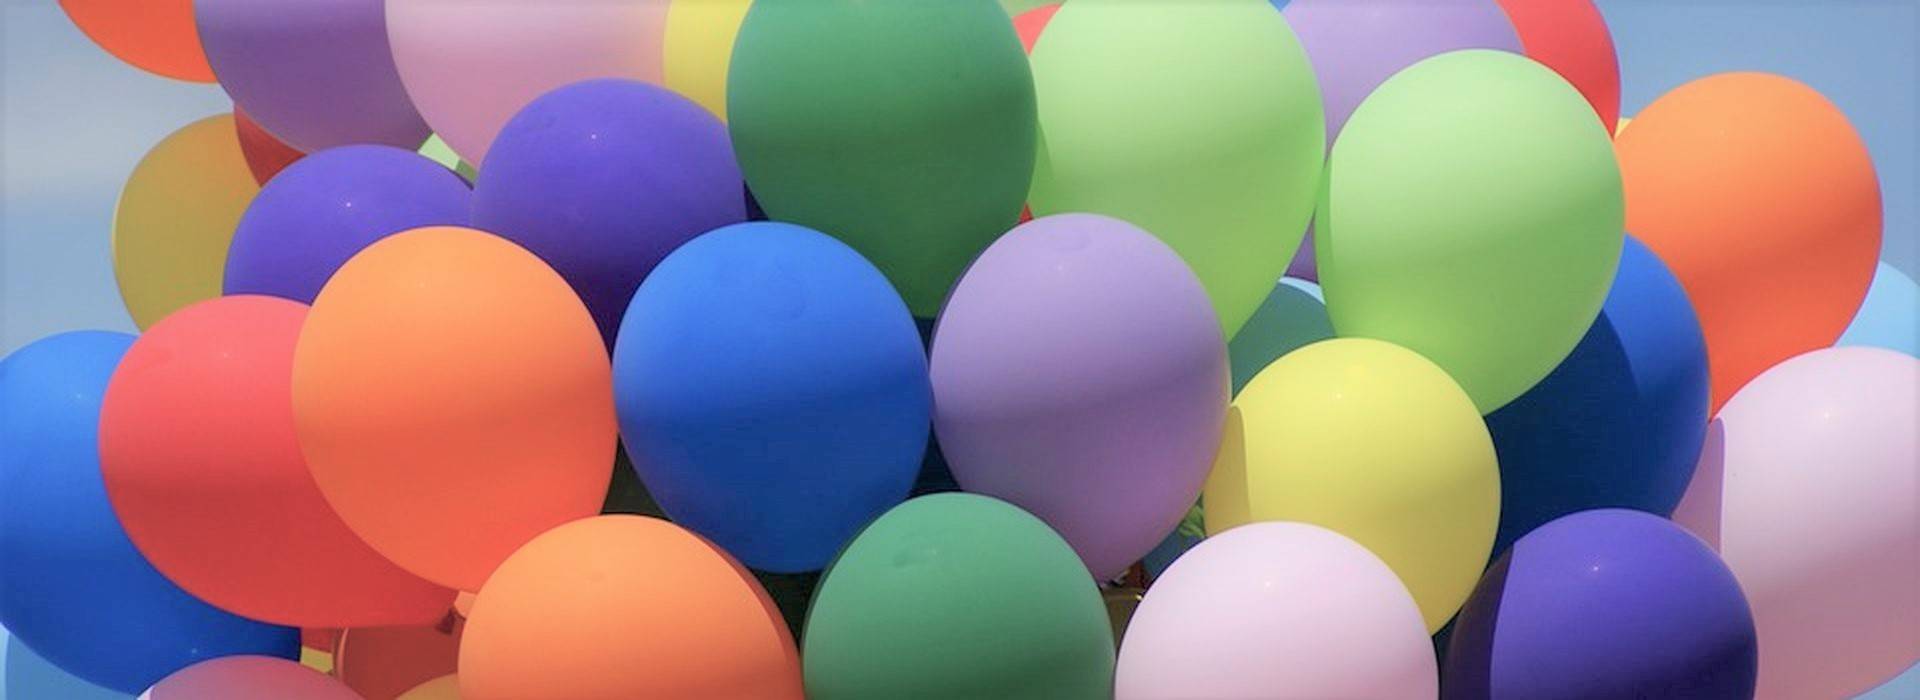 pastel balloons slider3